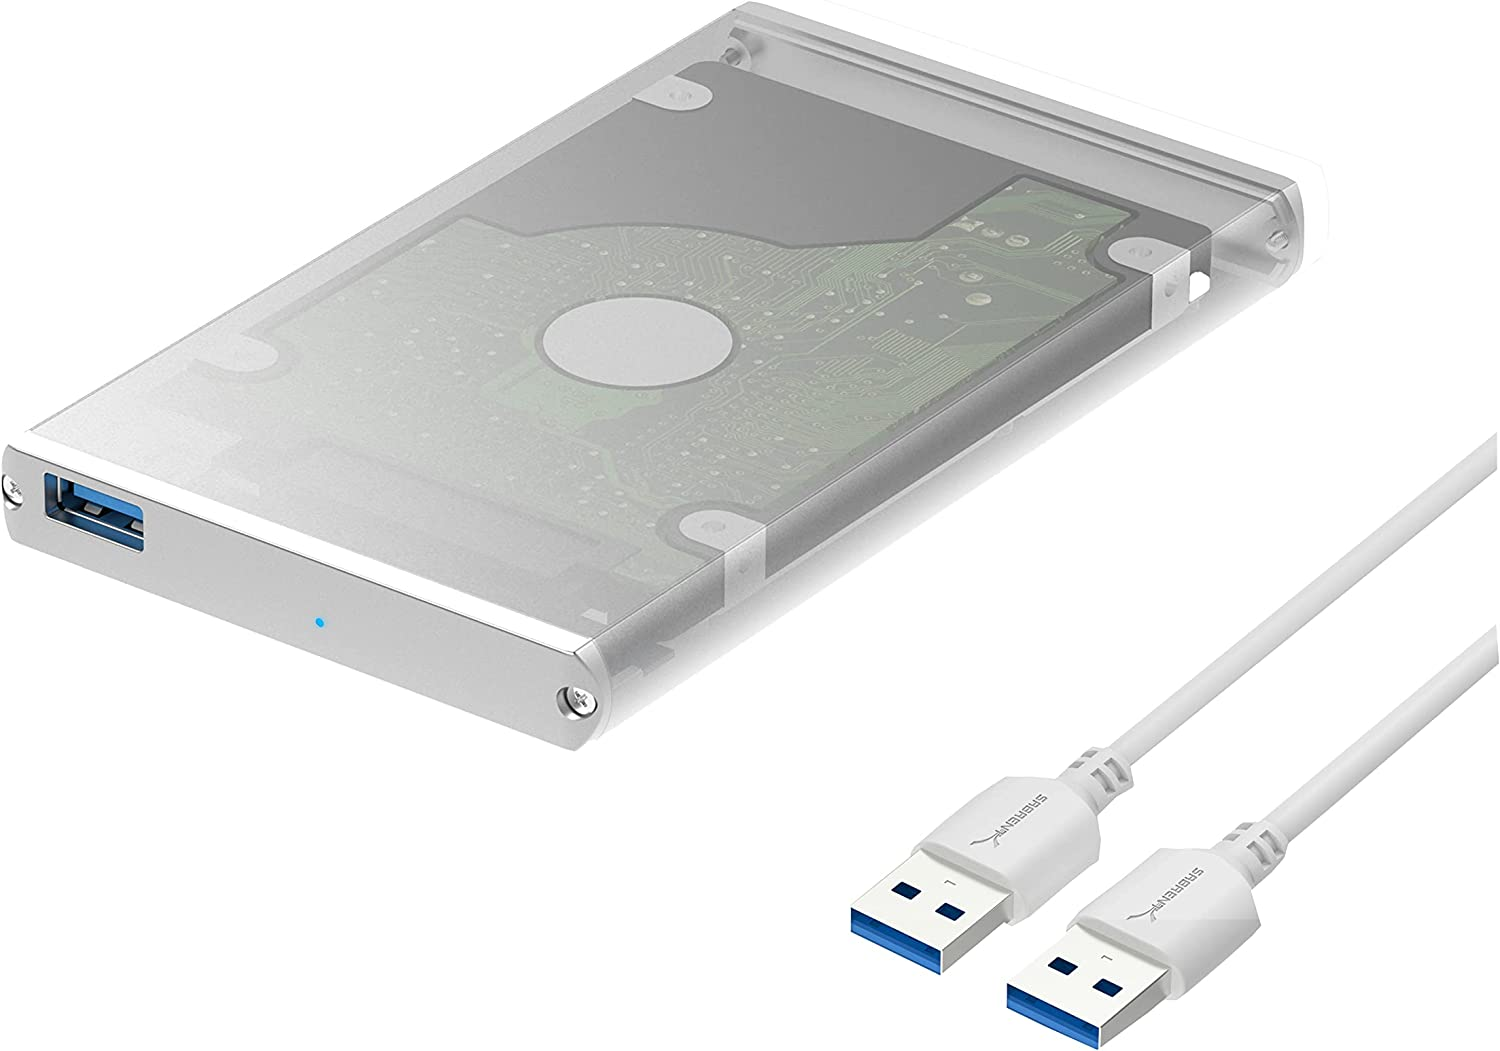 SABRENT Ultra Slim USB 3.0 to 2.5 Inch SATA External Aluminum Hard Drive Enclosure [Optimized for SSD, Support UASP SATA III] Silver (EC-UM30)